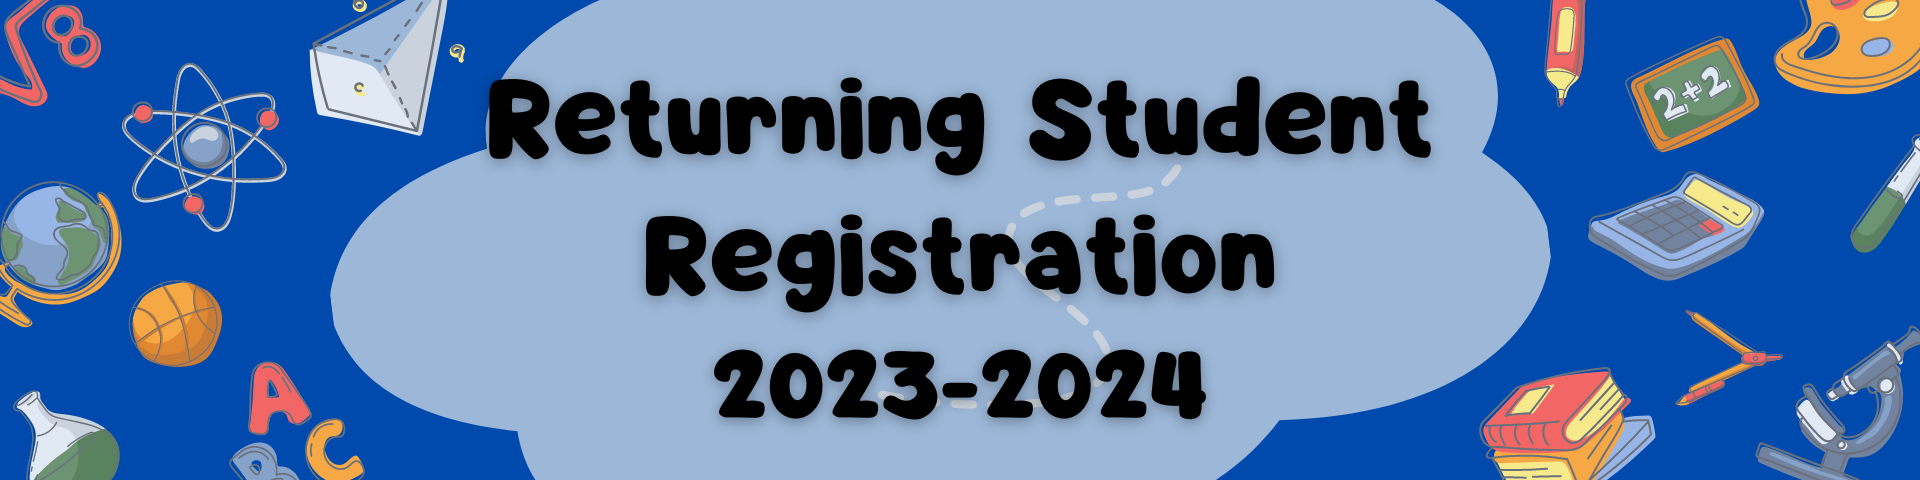 returning student registration